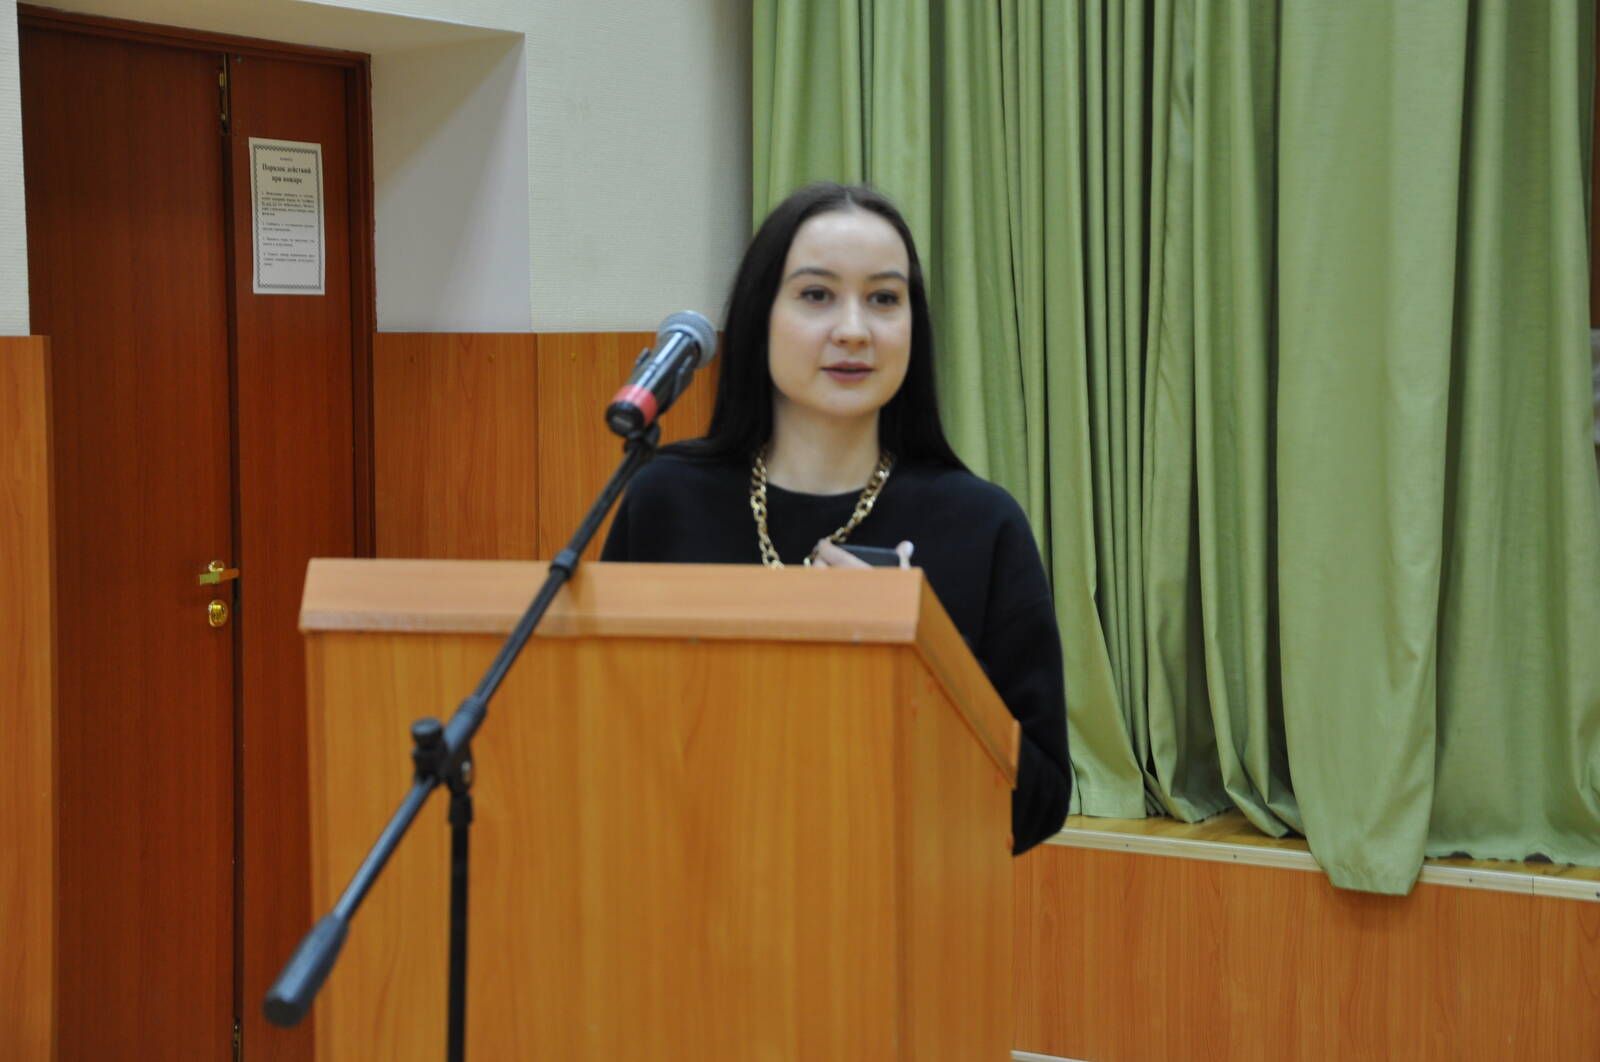 Саба муниципаль районы Советы каршындагы Яшьләр парламентына кандидатлар өчен дебатлары узды